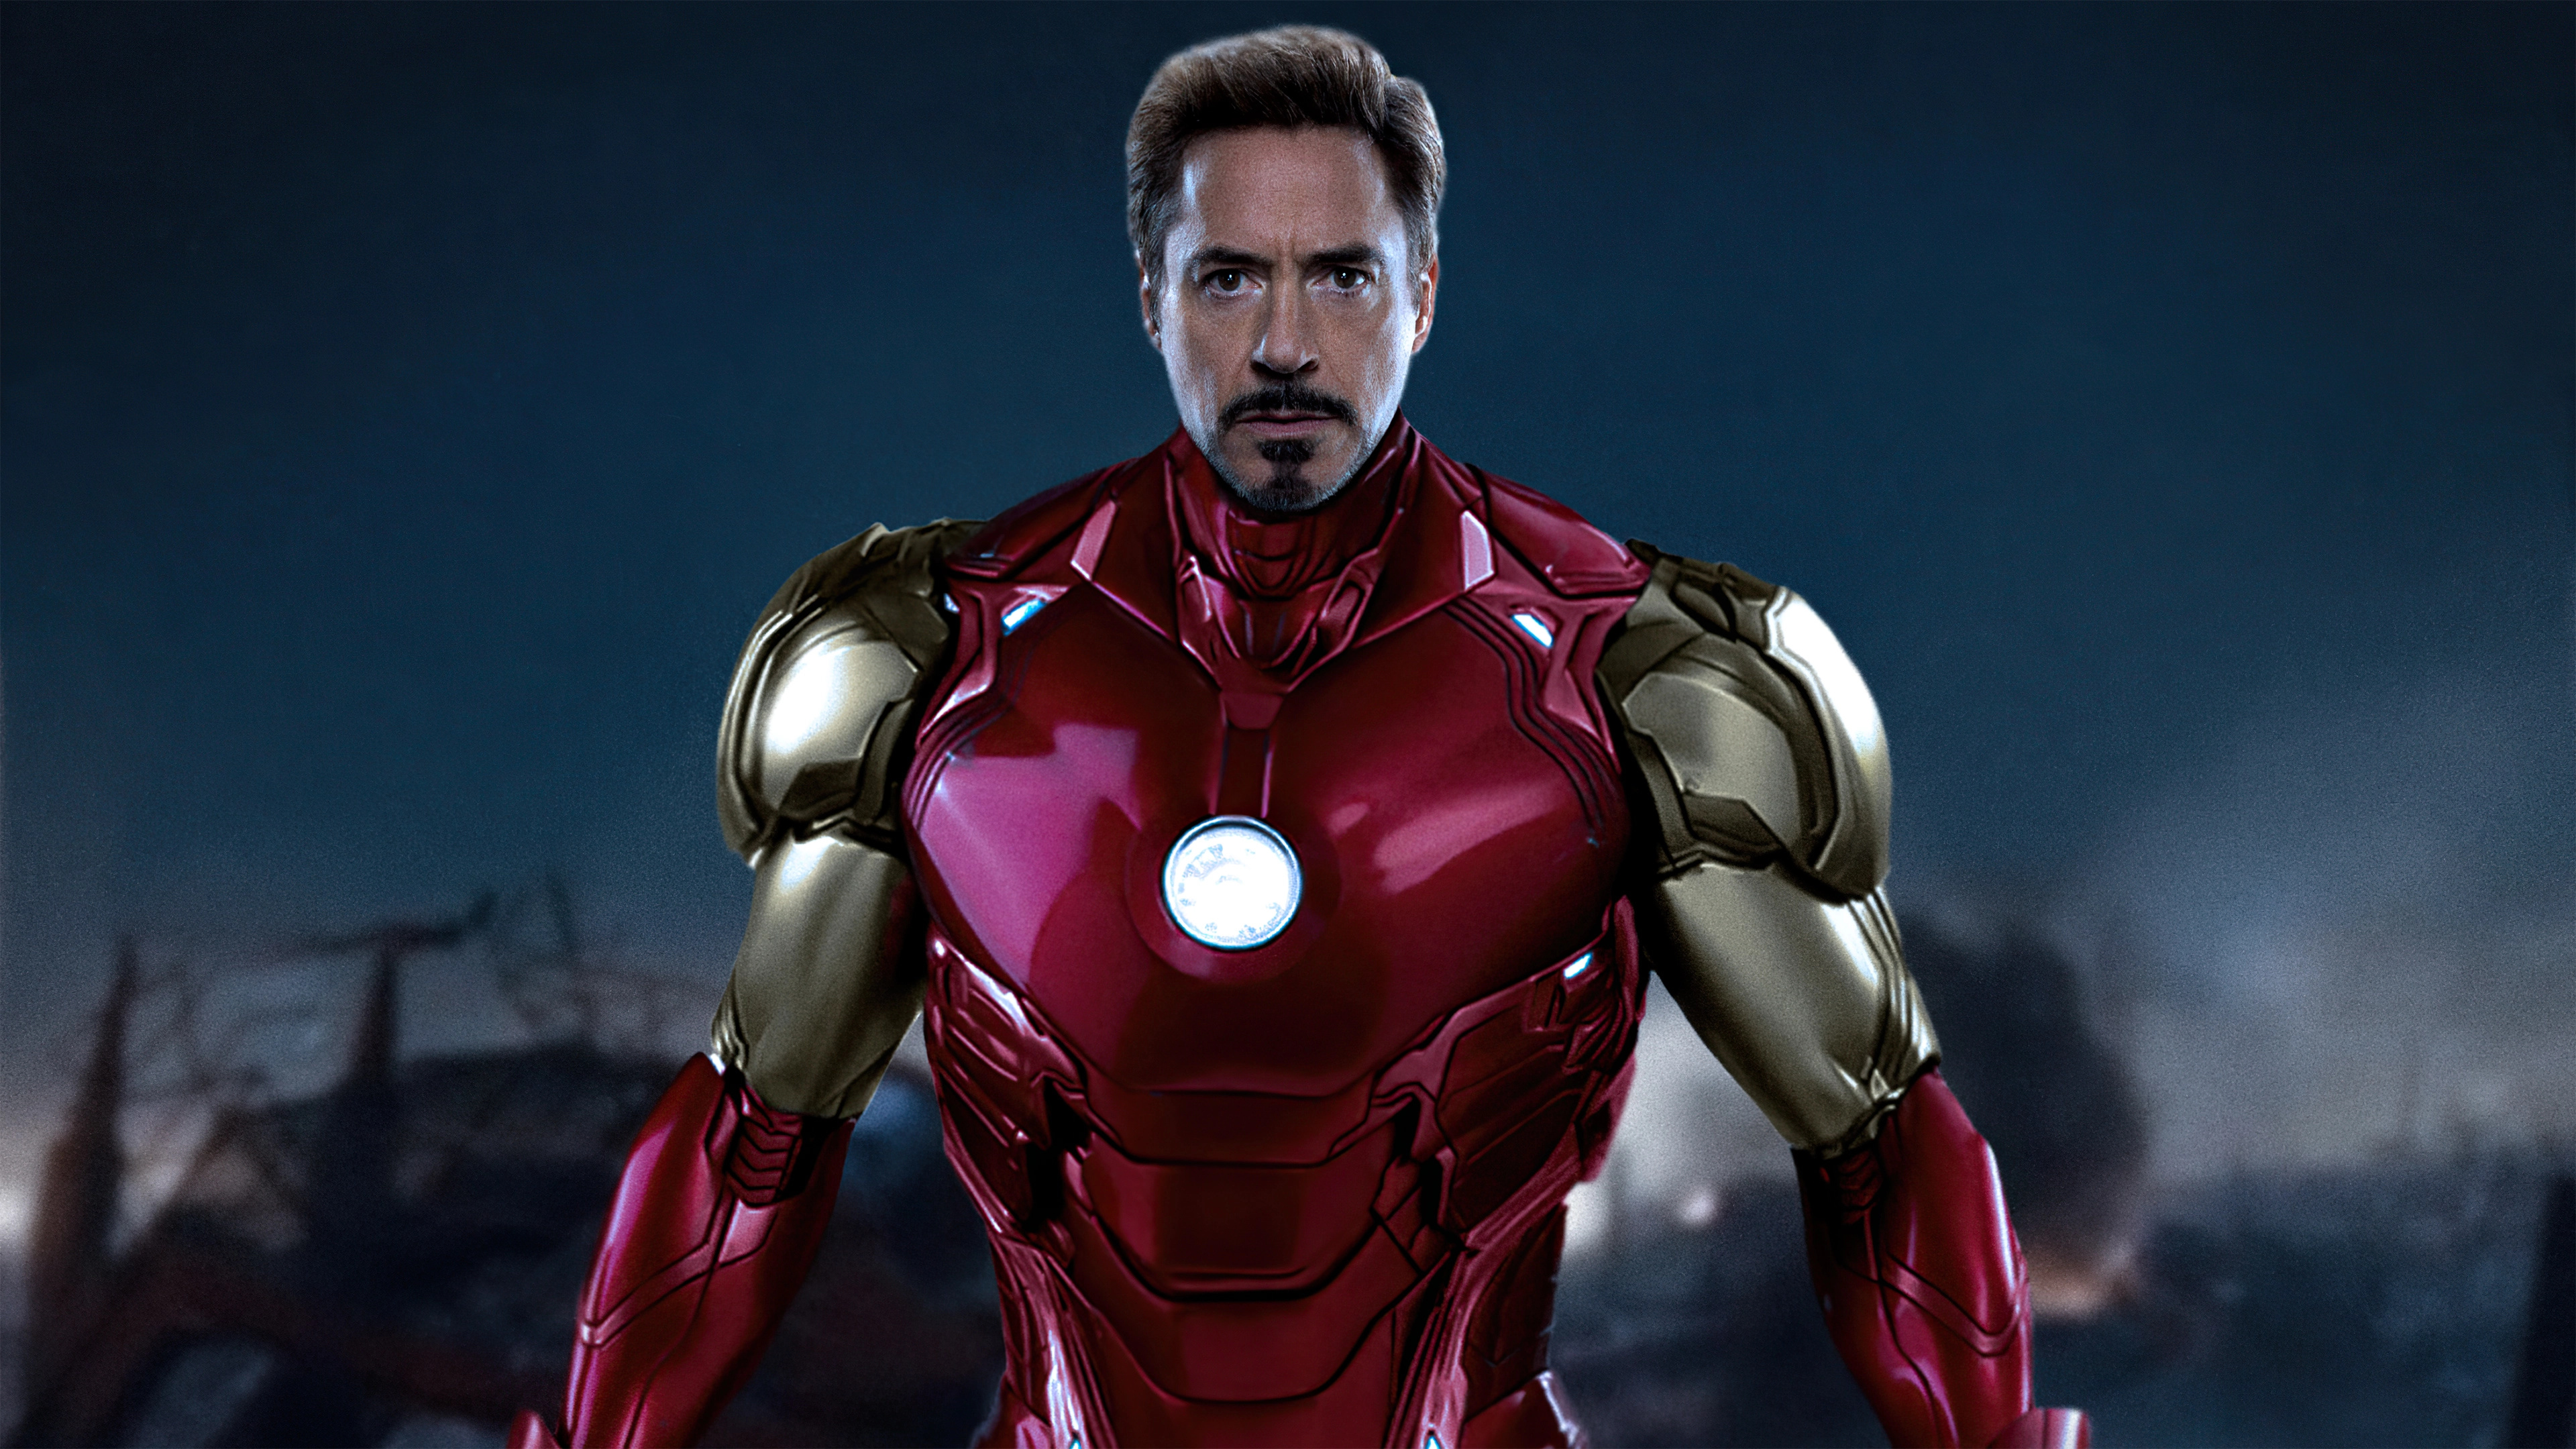 Tony Stark (Iron Man) Wallpapers (30+ images inside)